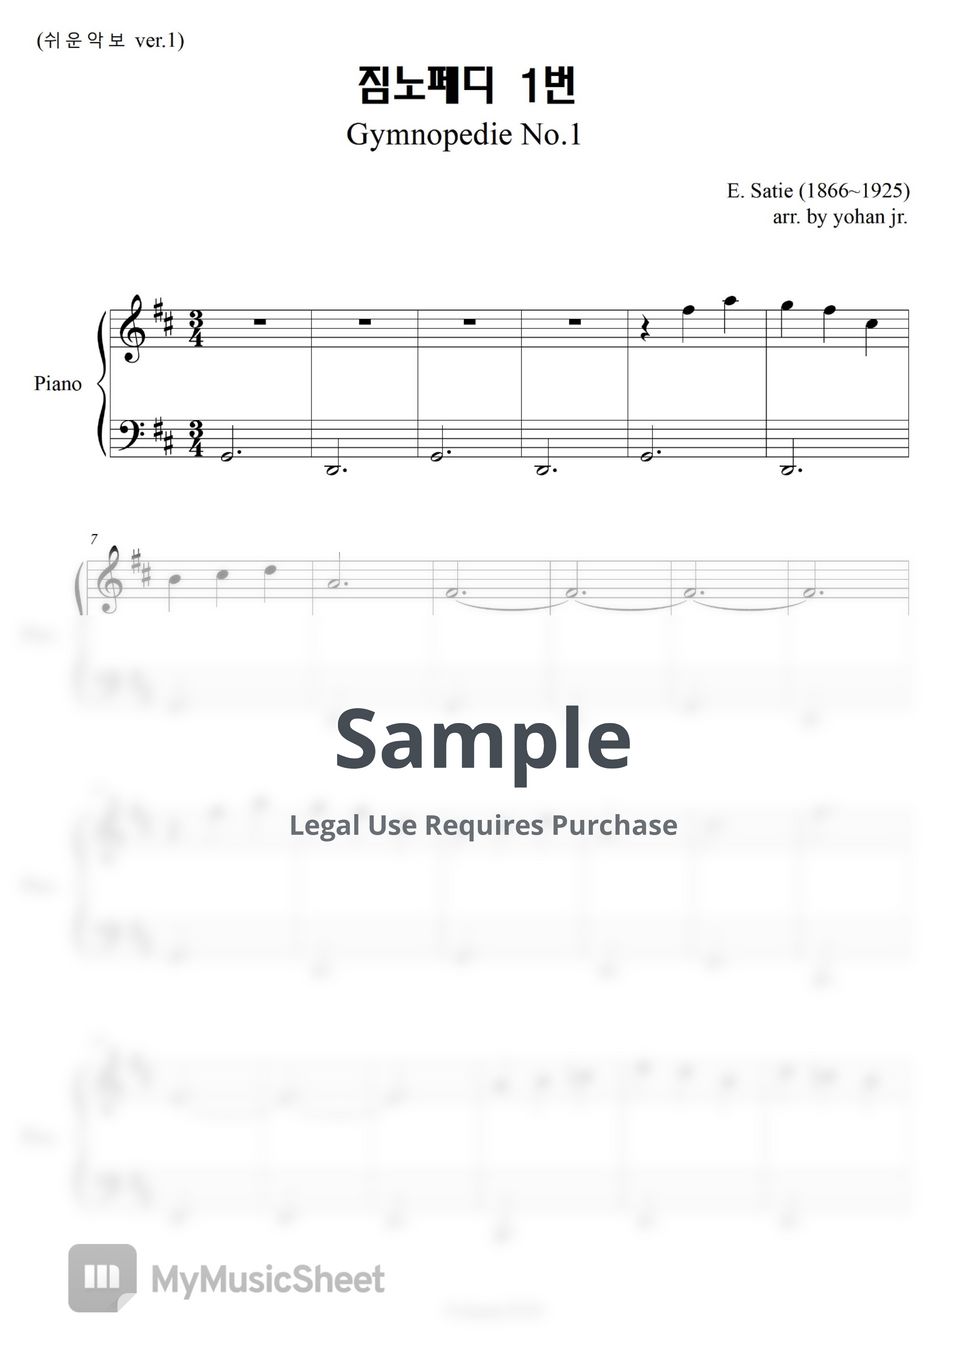 E. Satie - Gymnopedie no.1 (easy piano ver.1) by classic2020